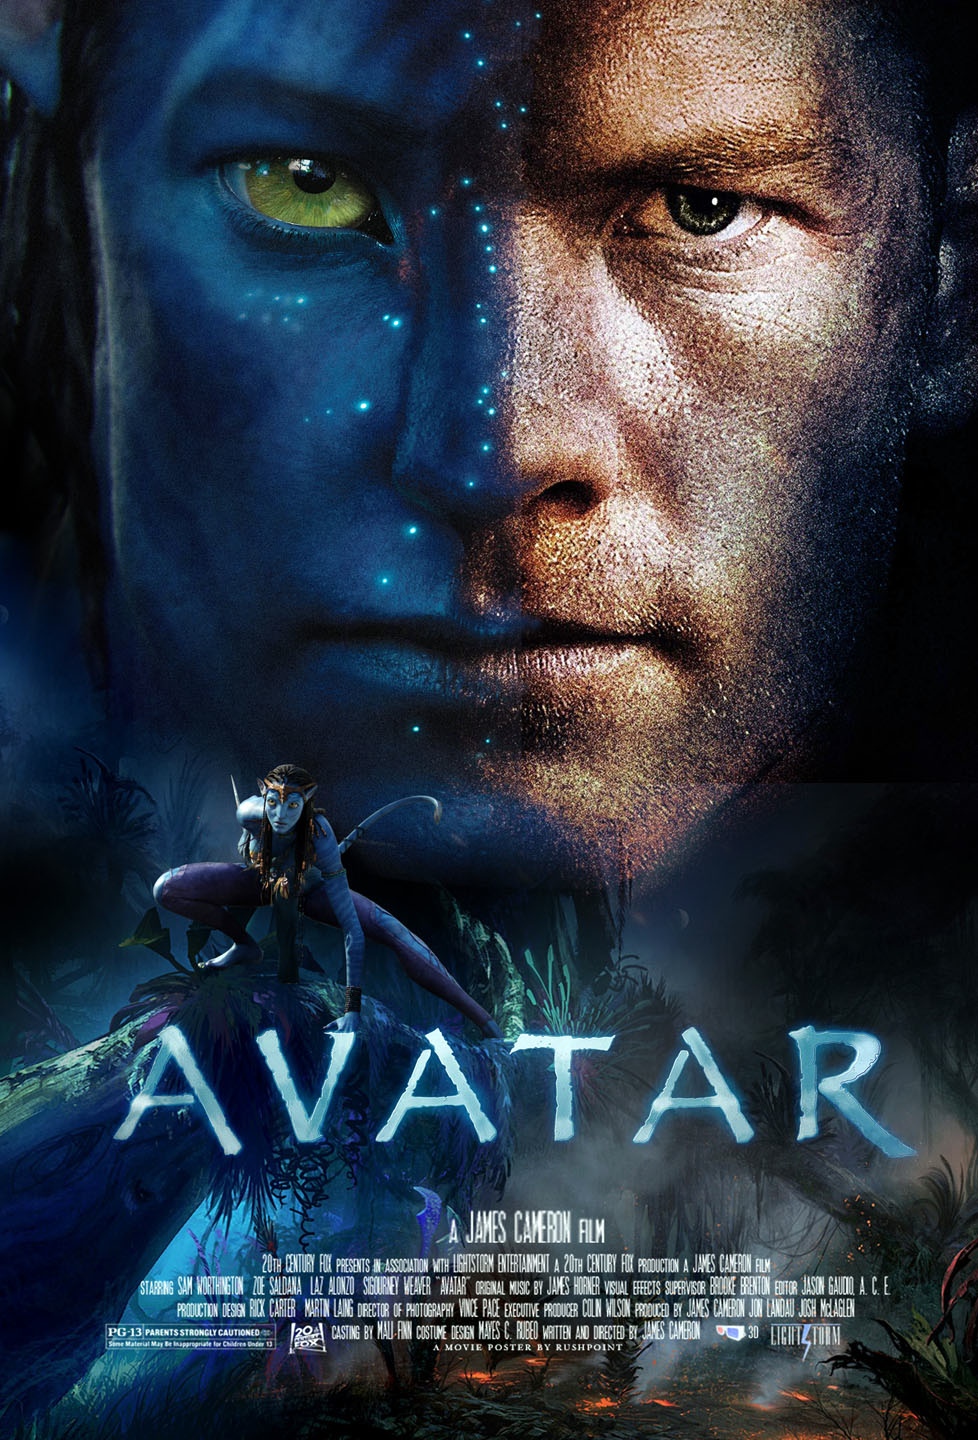 Avatar The Last Airbender Season 1  Concept Trailer  YouTube